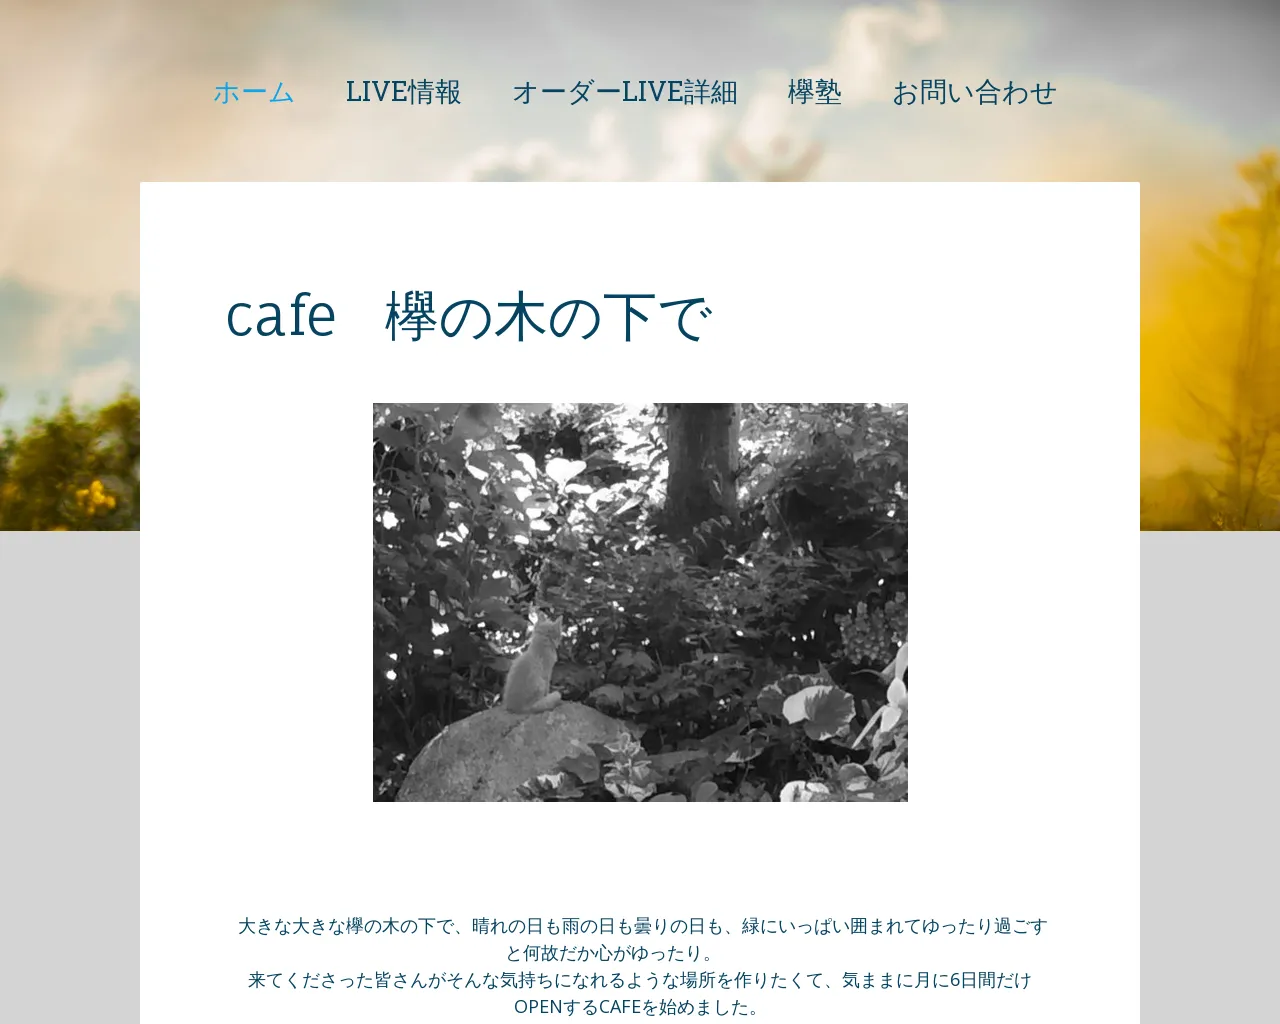 cafe 欅の木の下で site